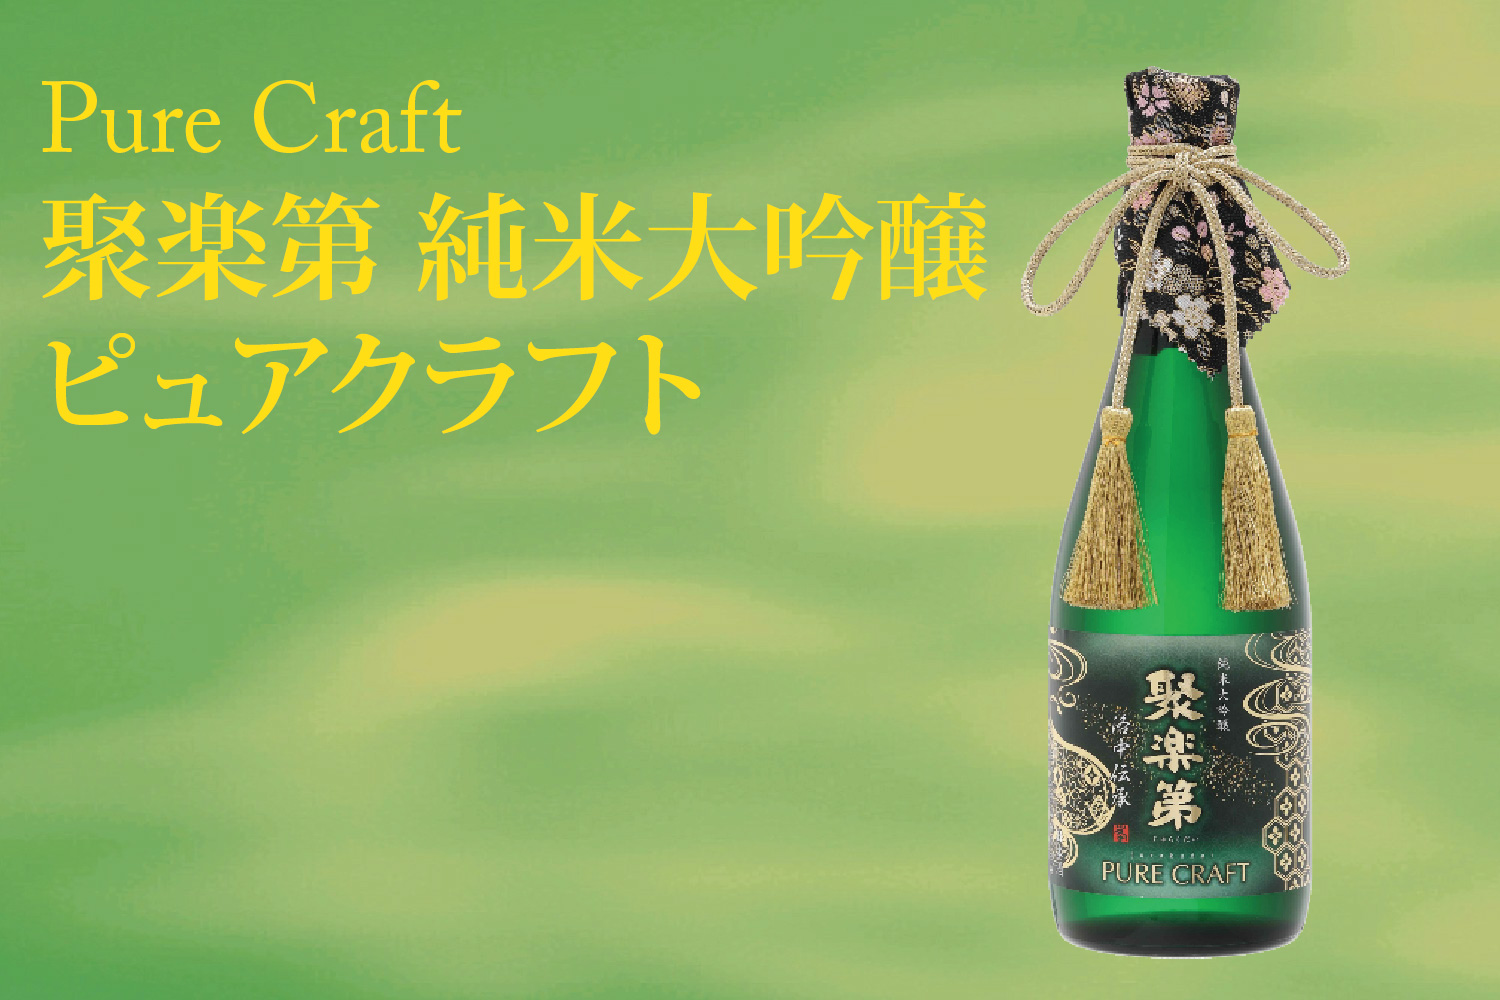 pure-craft-daiginjo-sake-kyoto-limited-production-japanese-sake